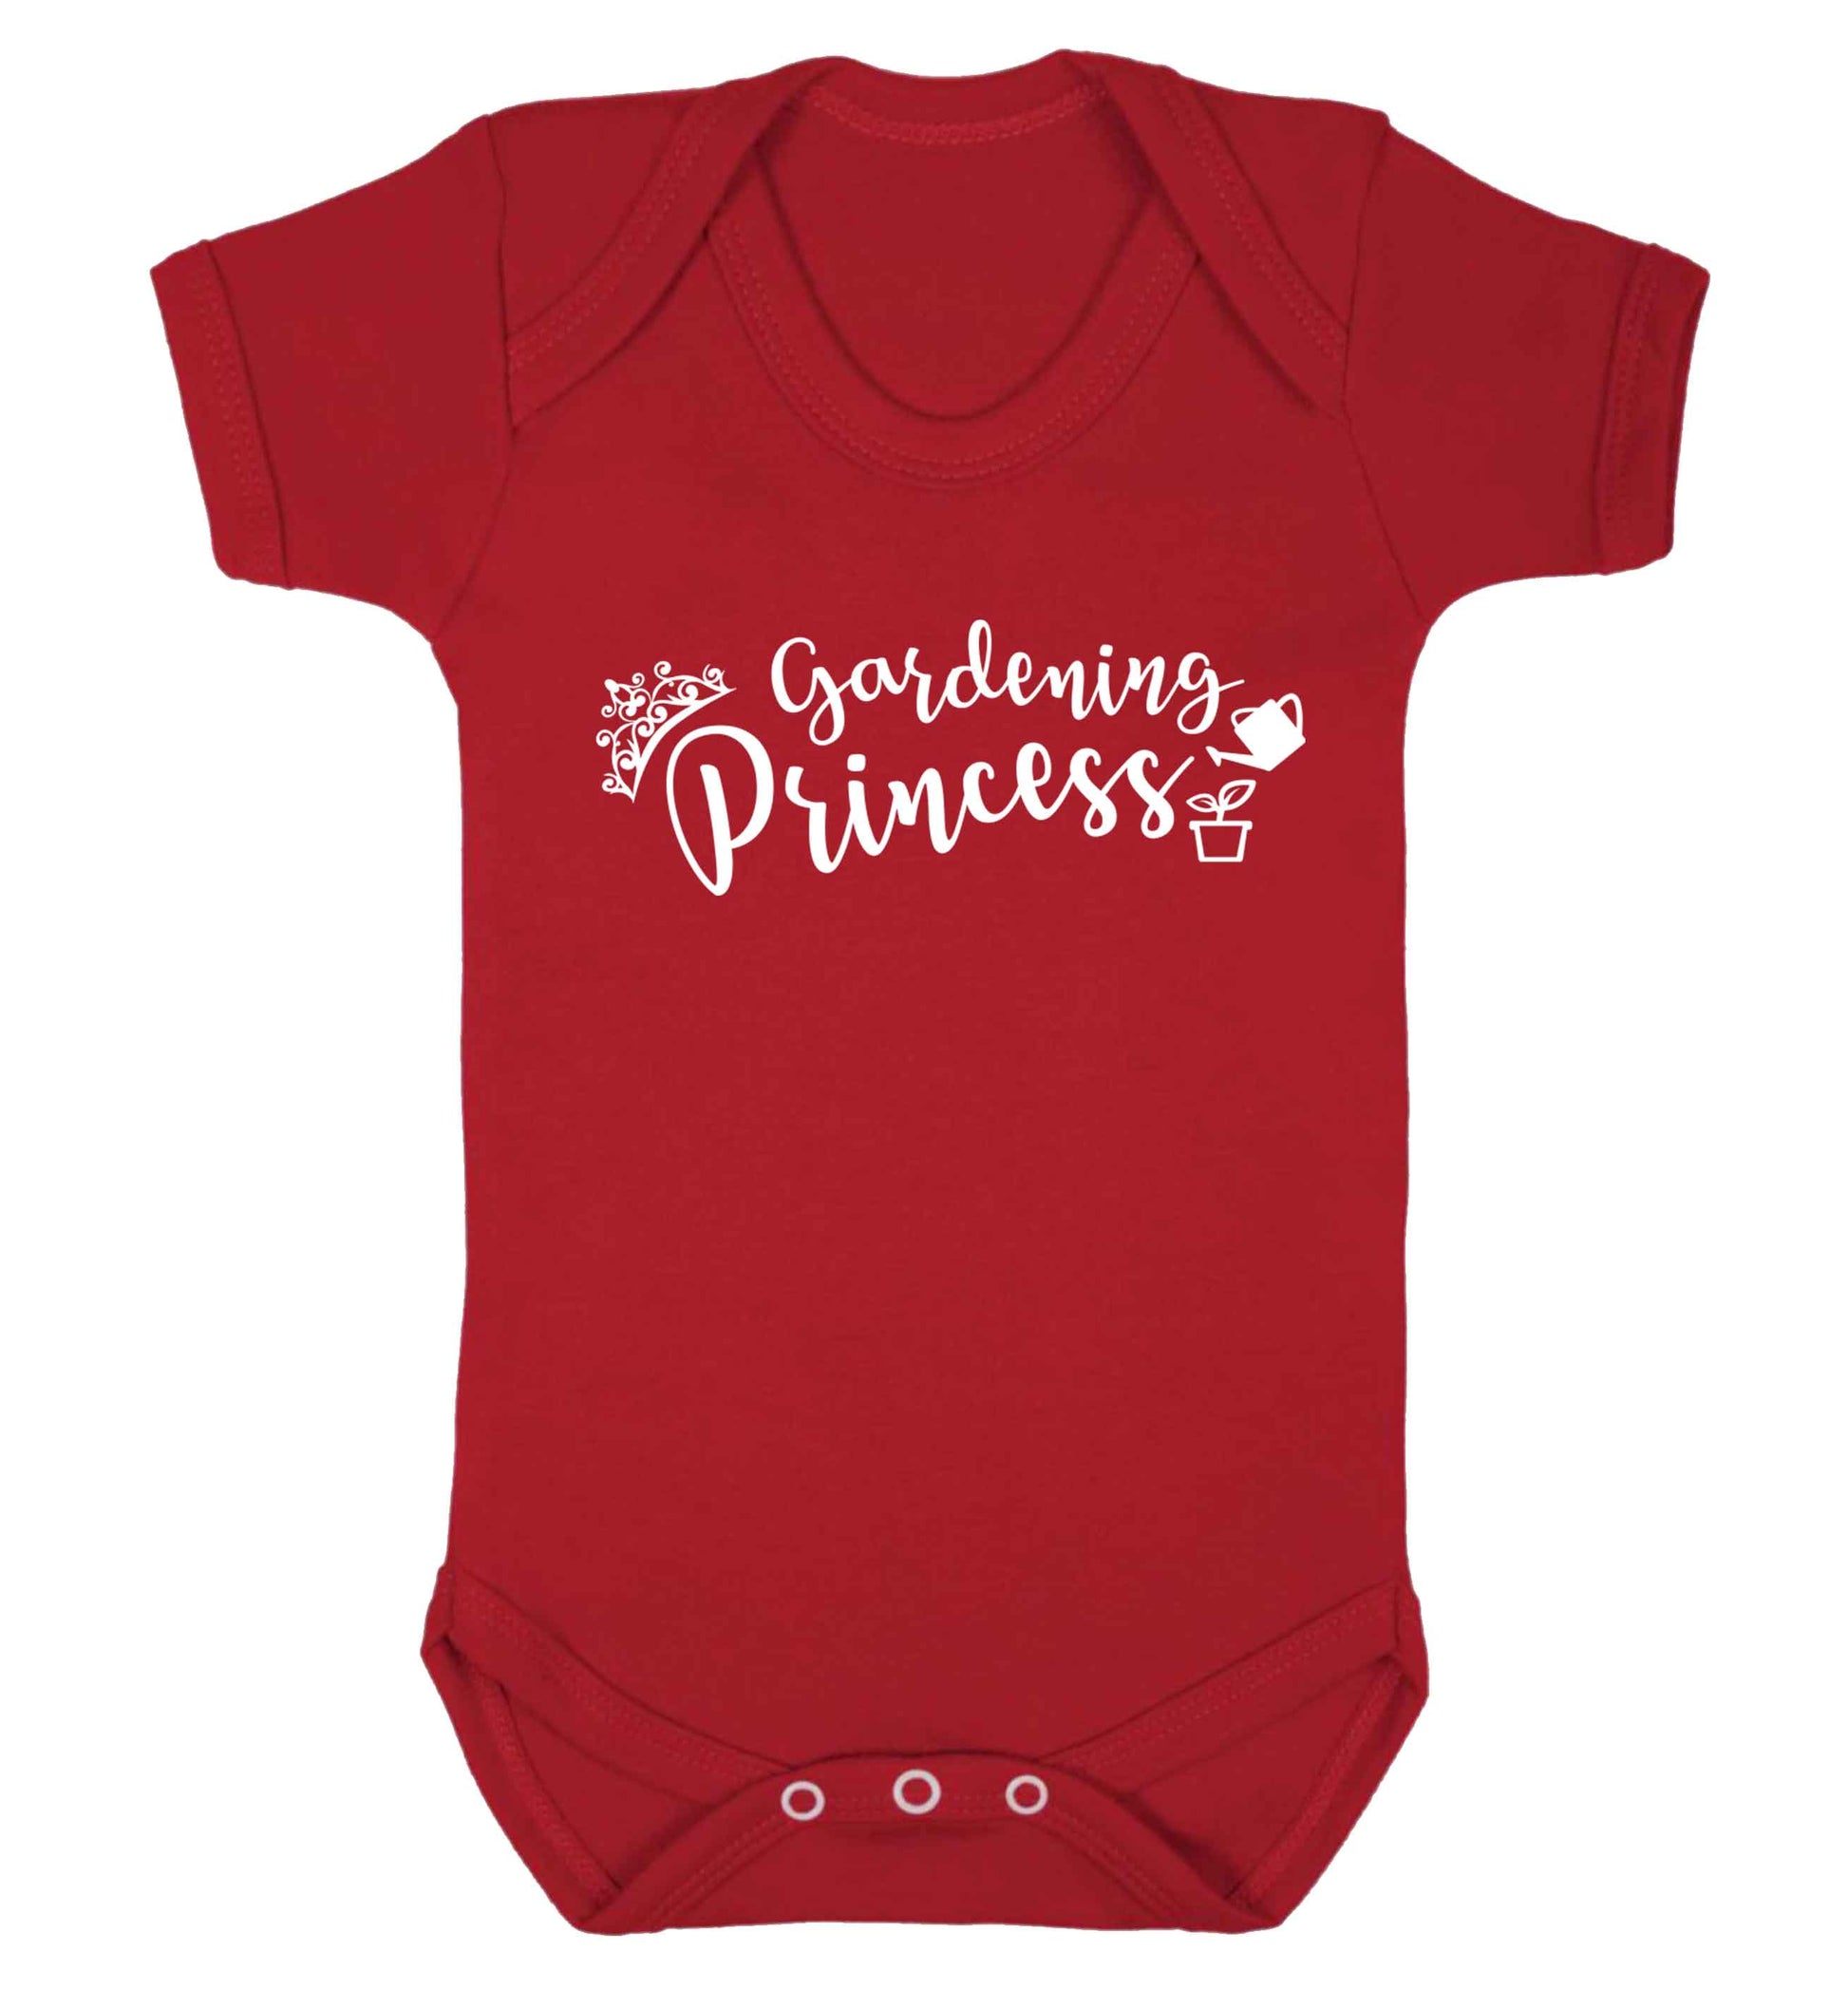 Gardening princess Baby Vest red 18-24 months